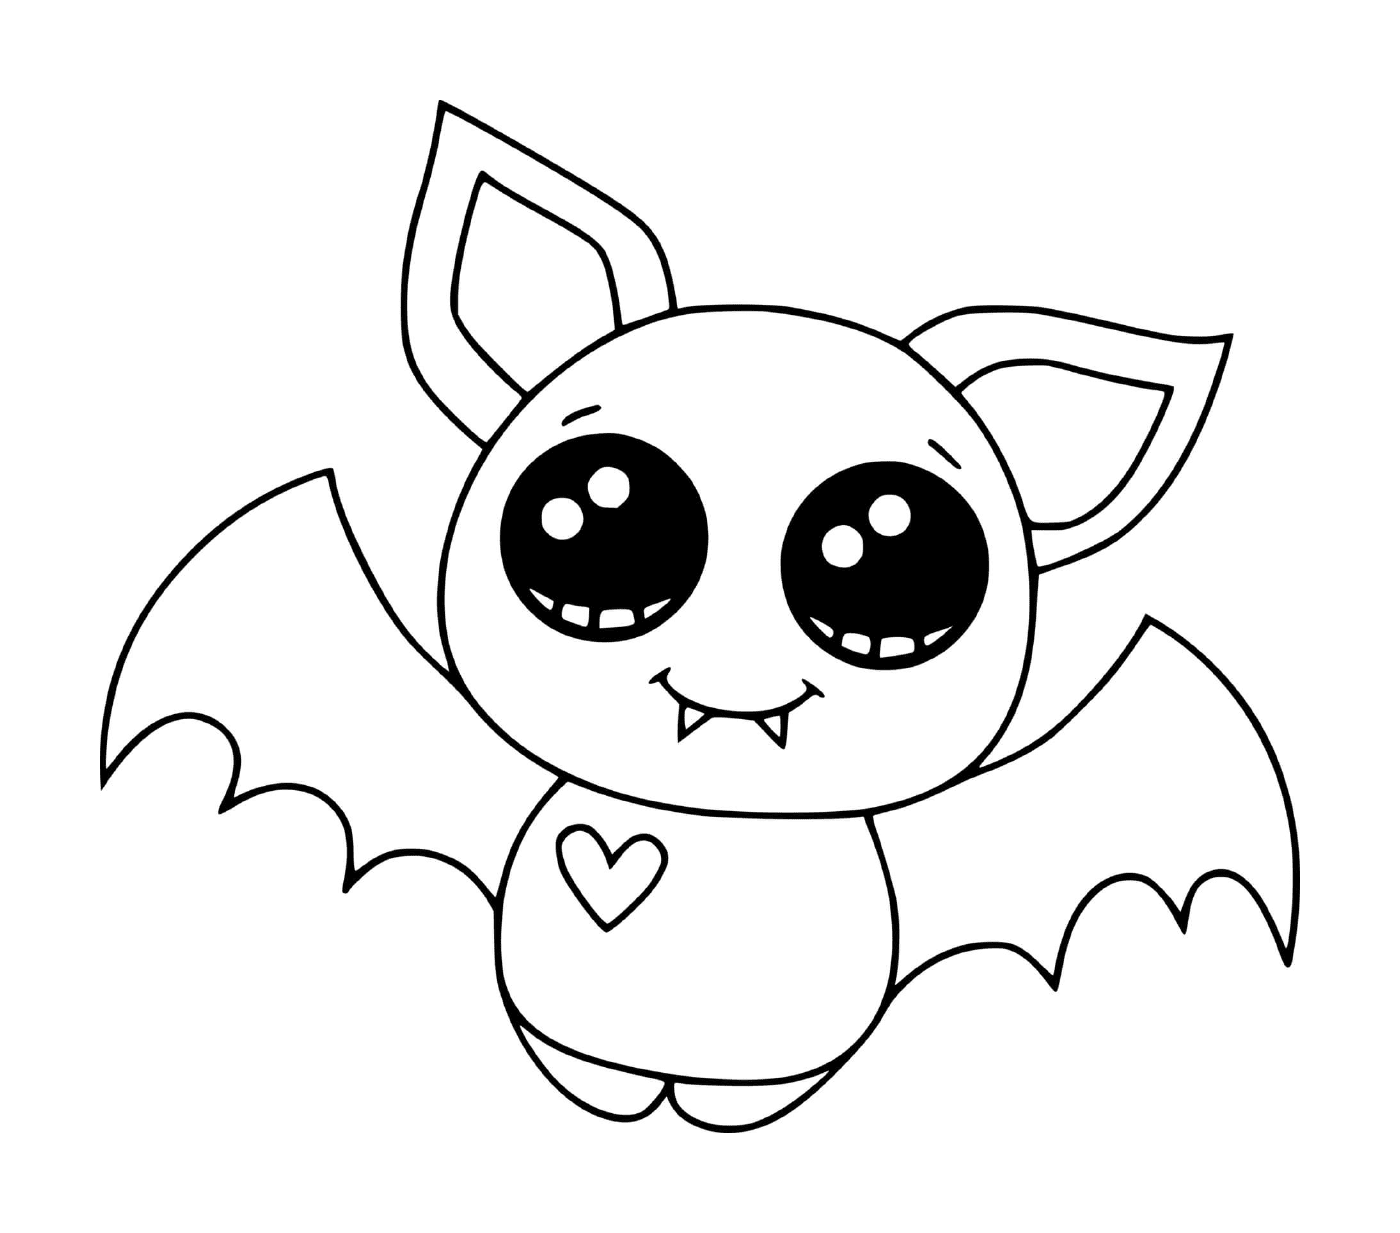  baby cute kawaii bat in cartoon version 